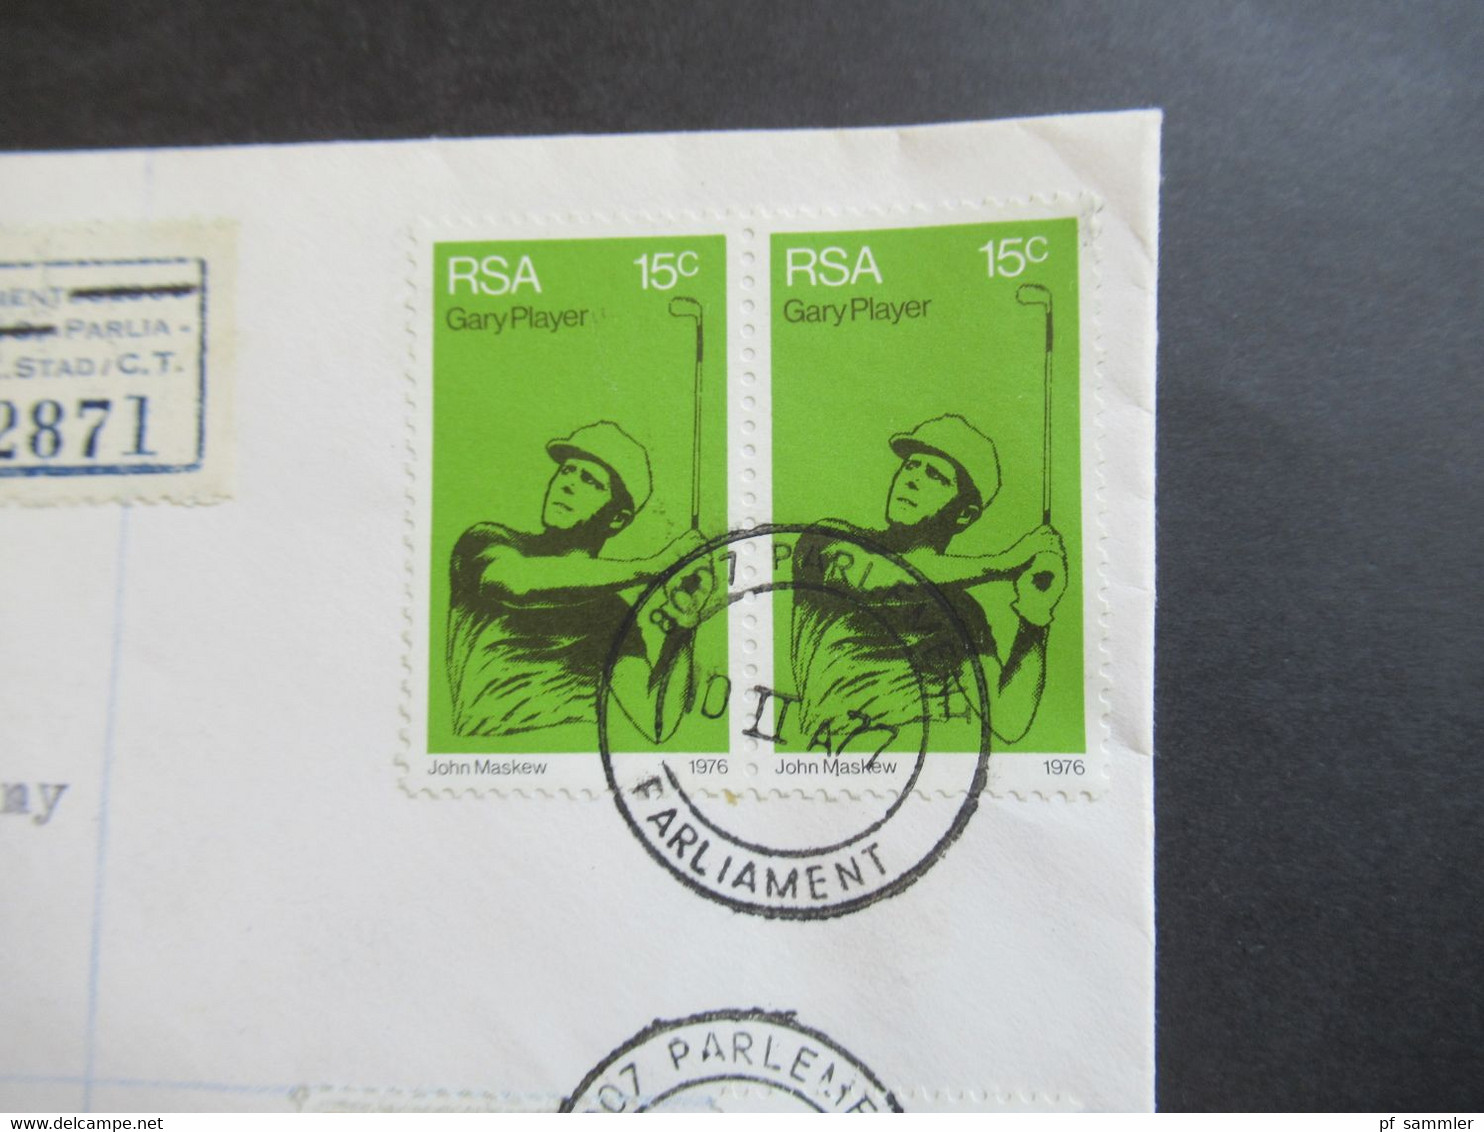 RSA / Süd - Afrika 1977 Air Mail Nach Israel R-Zettel Parlement Parliament K. Stad / Cape Town Volksraad Kaapstad - Lettres & Documents